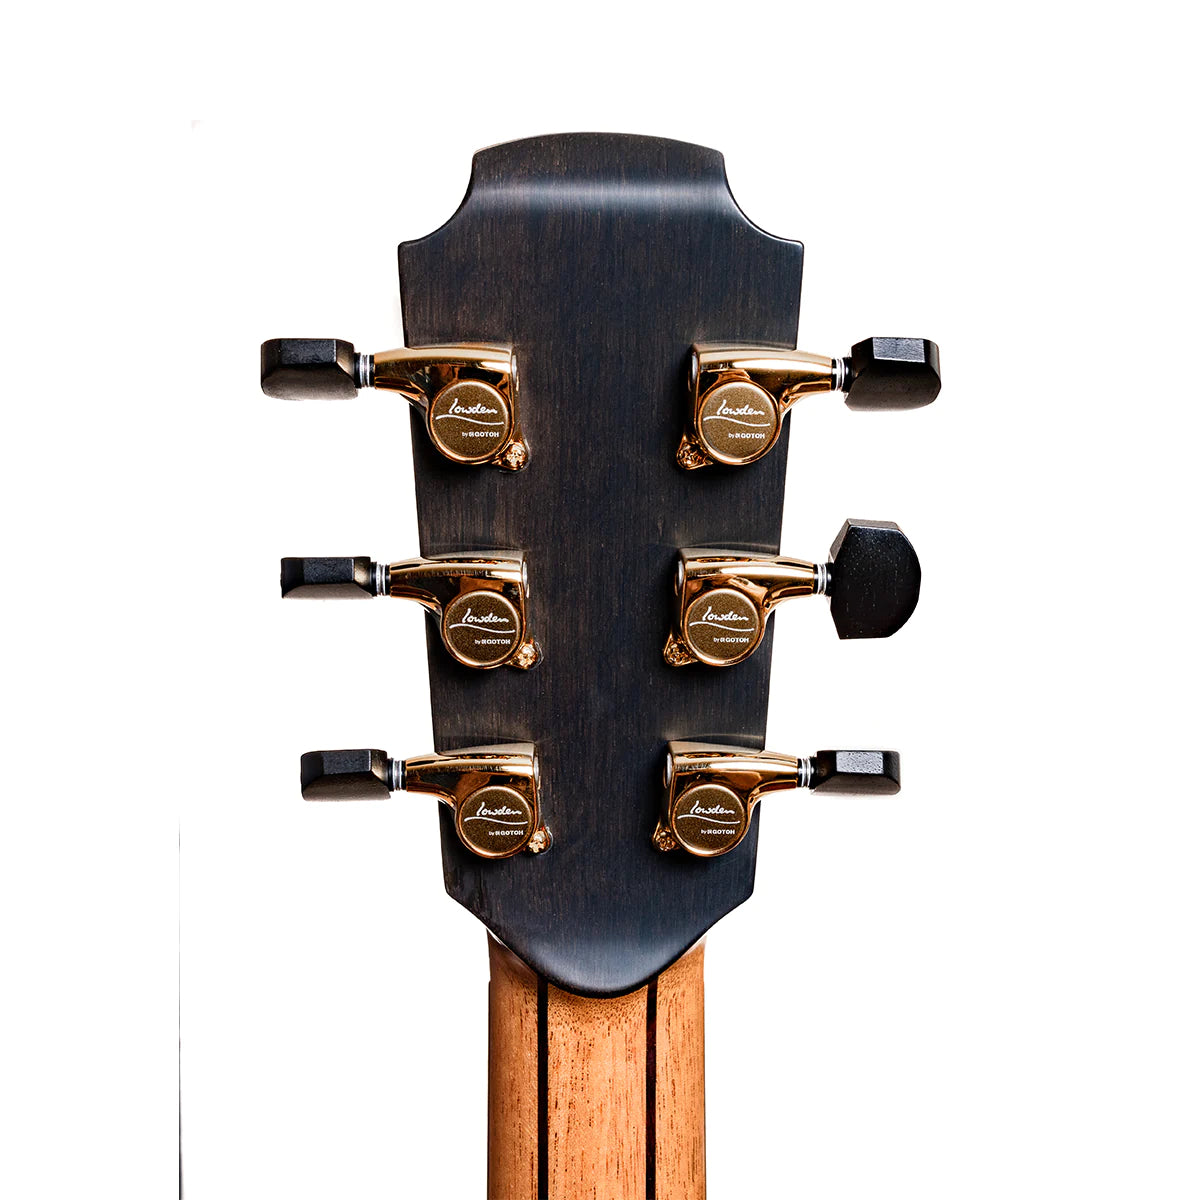 Đàn Guitar Acoustic Lowden 50 Series F-50 Guatemalan Rosewood / Sinker Redwood - Việt Music